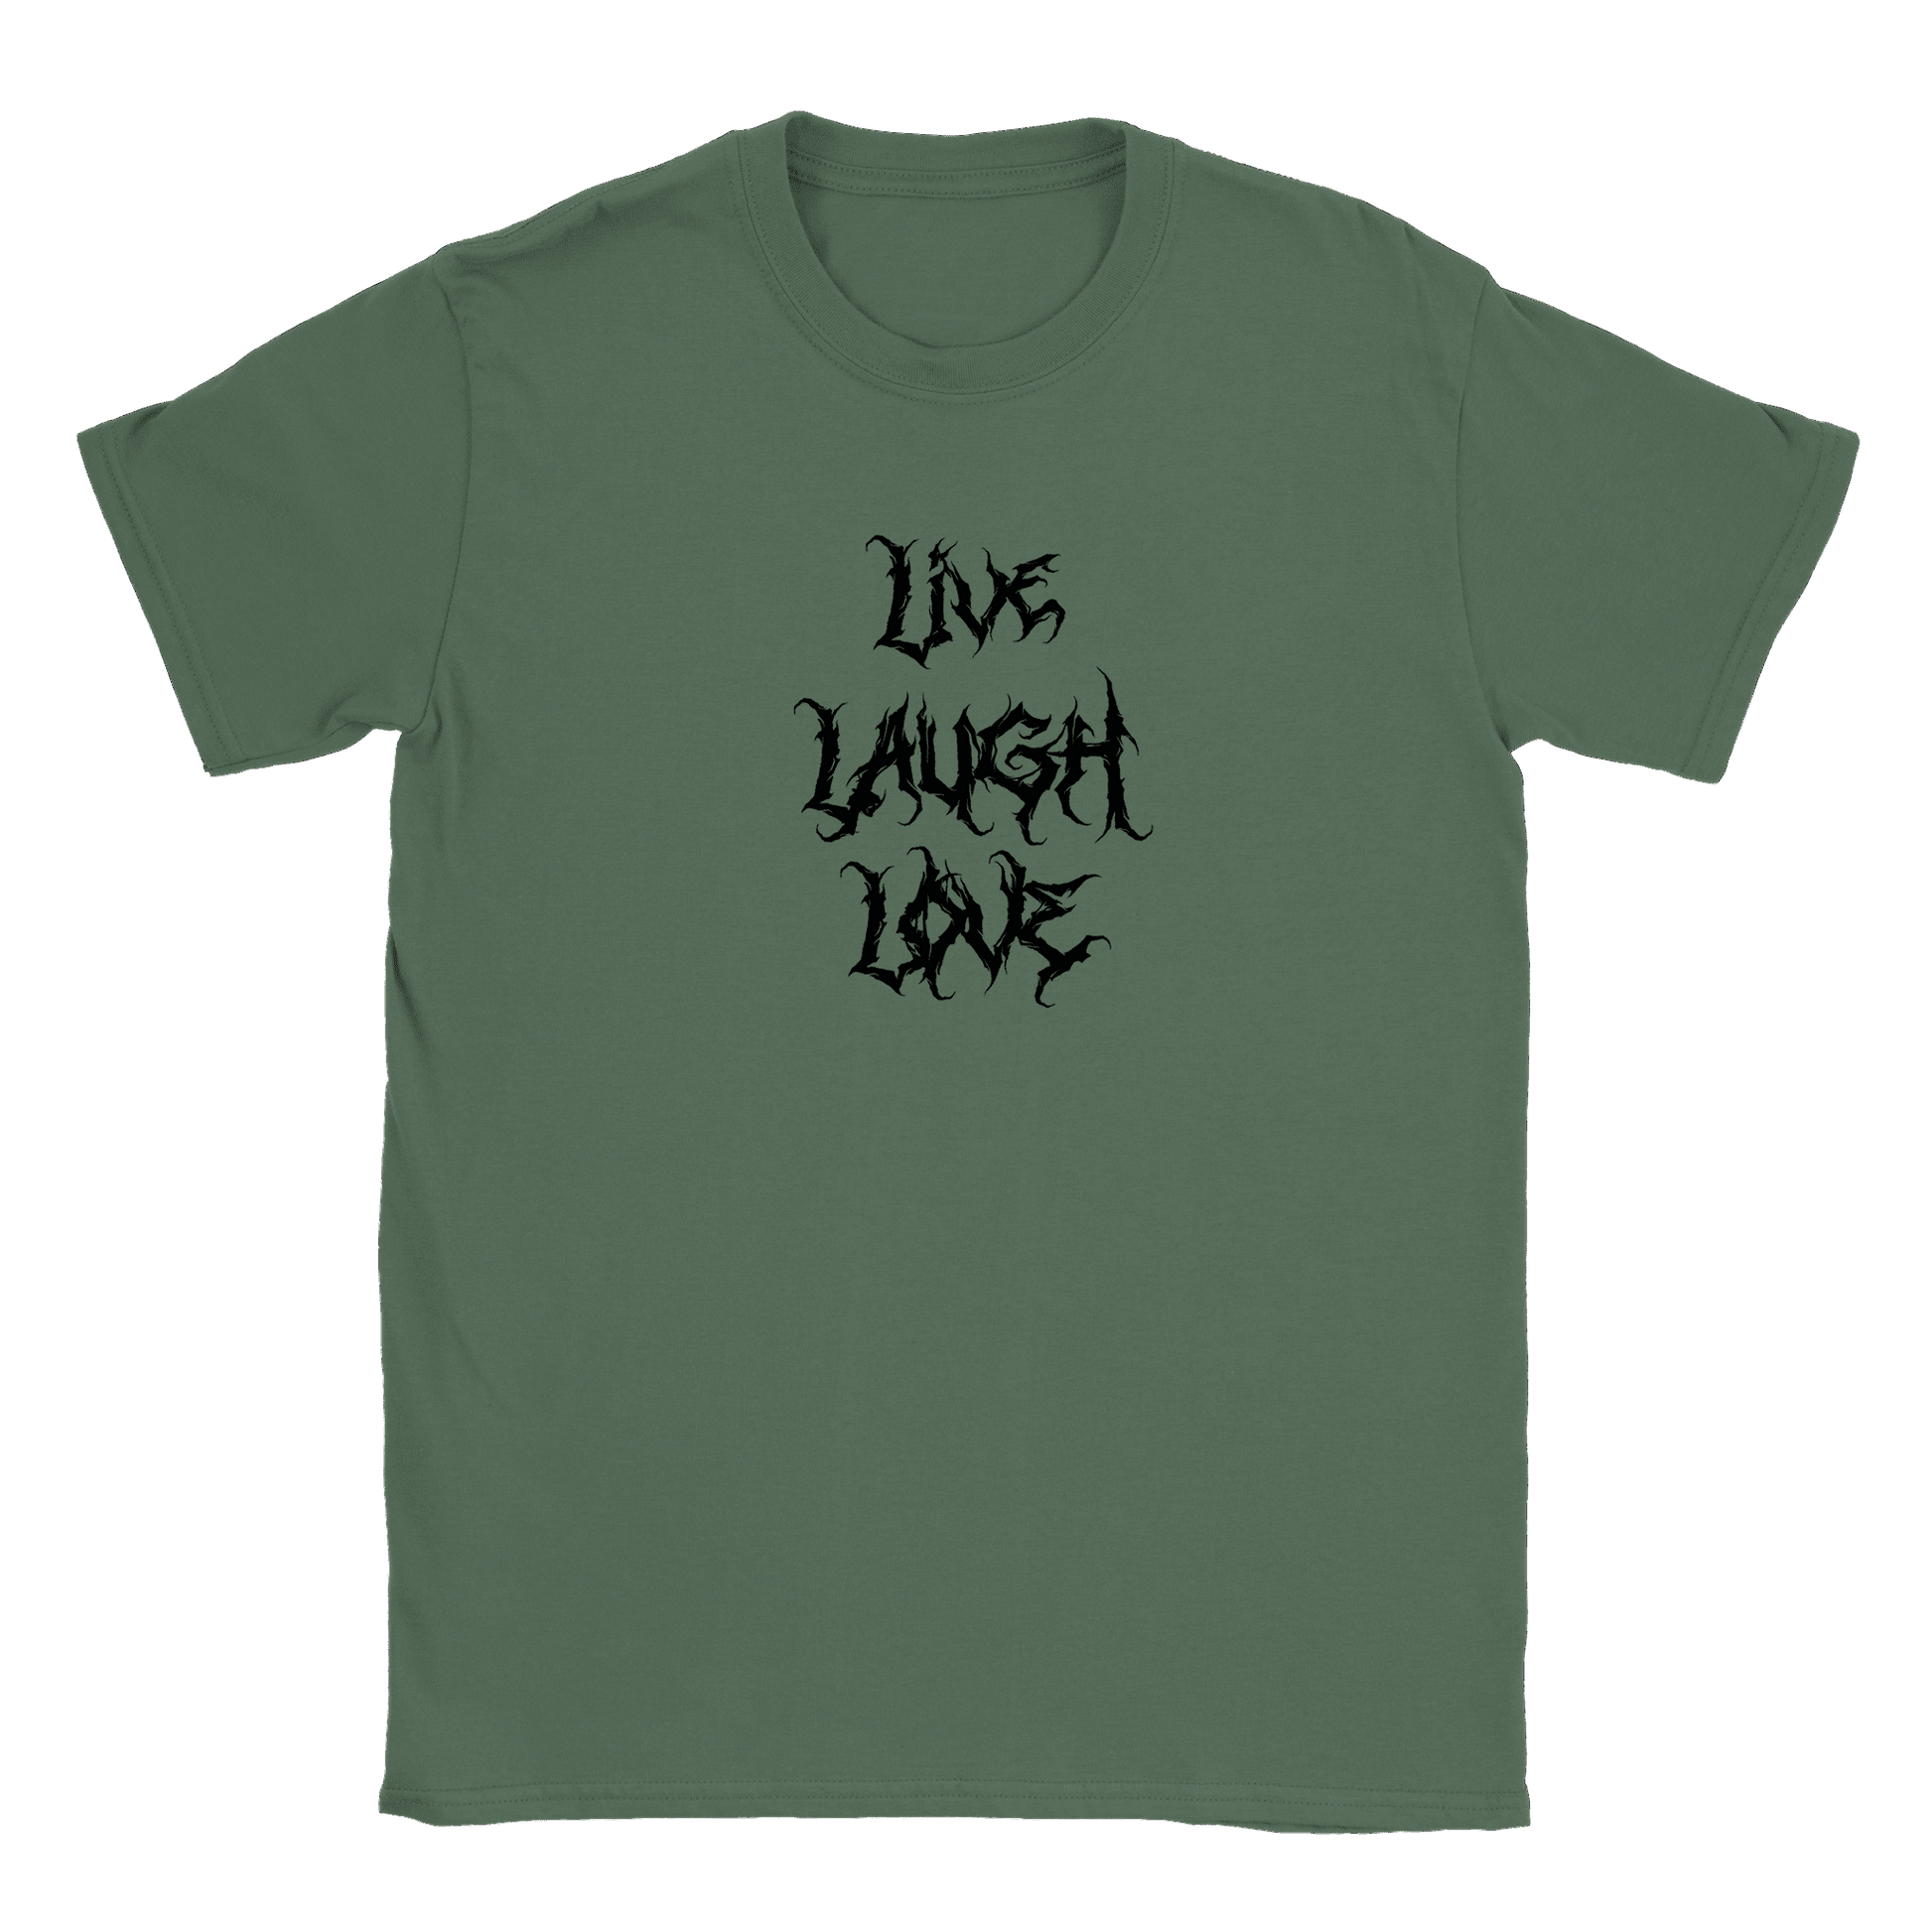 Live Laugh Love - T-shirt Military Green